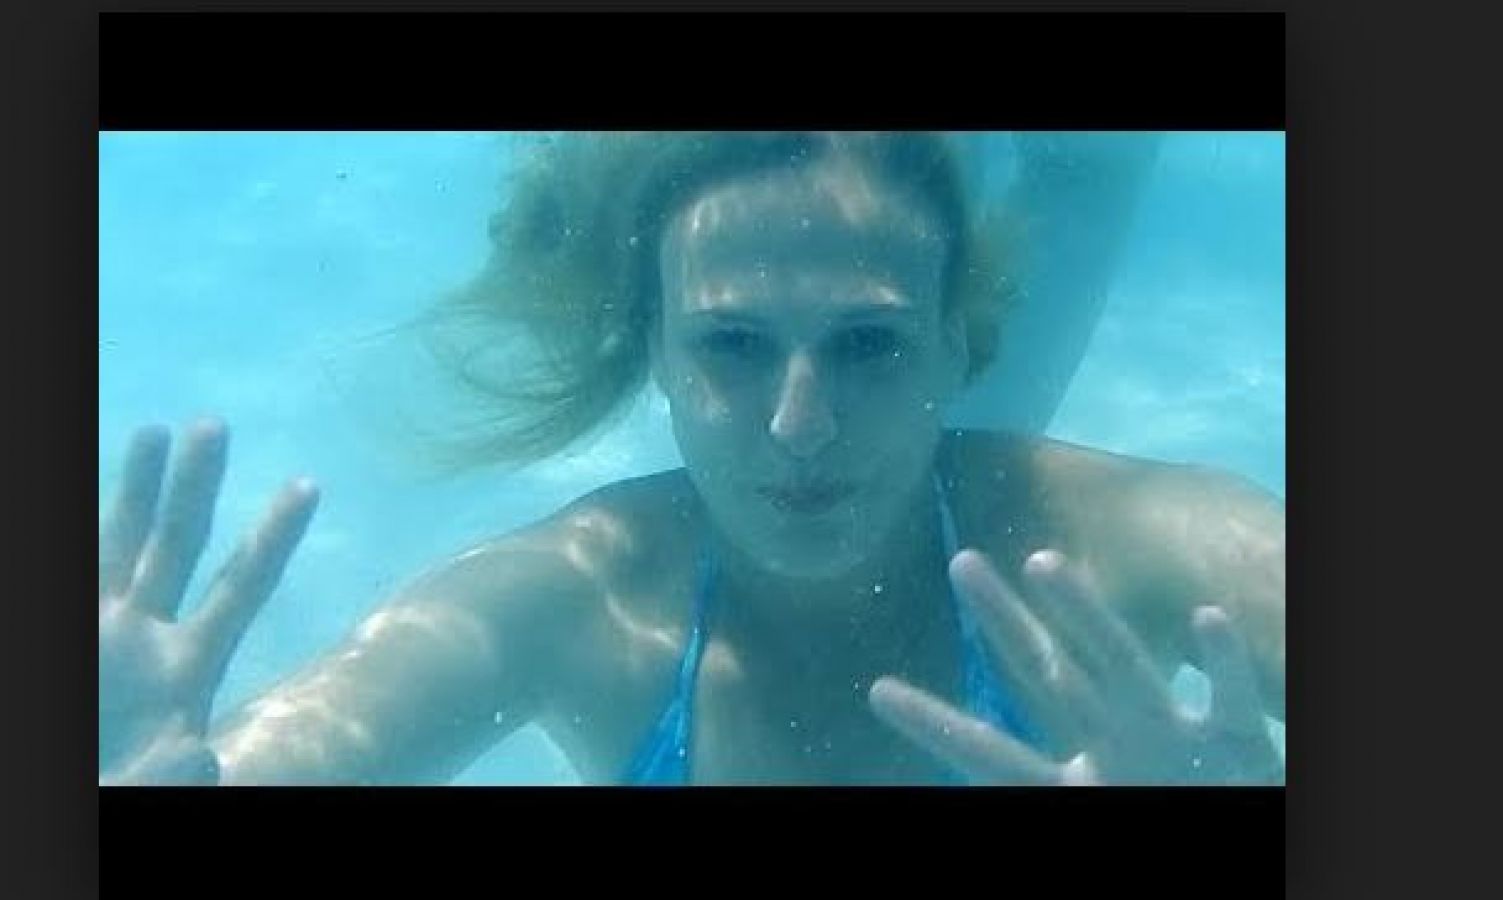 Girl girl scene movie. Underwater девушки утопление. Женщина Underwater Drown. Underwater Scenes девушки.